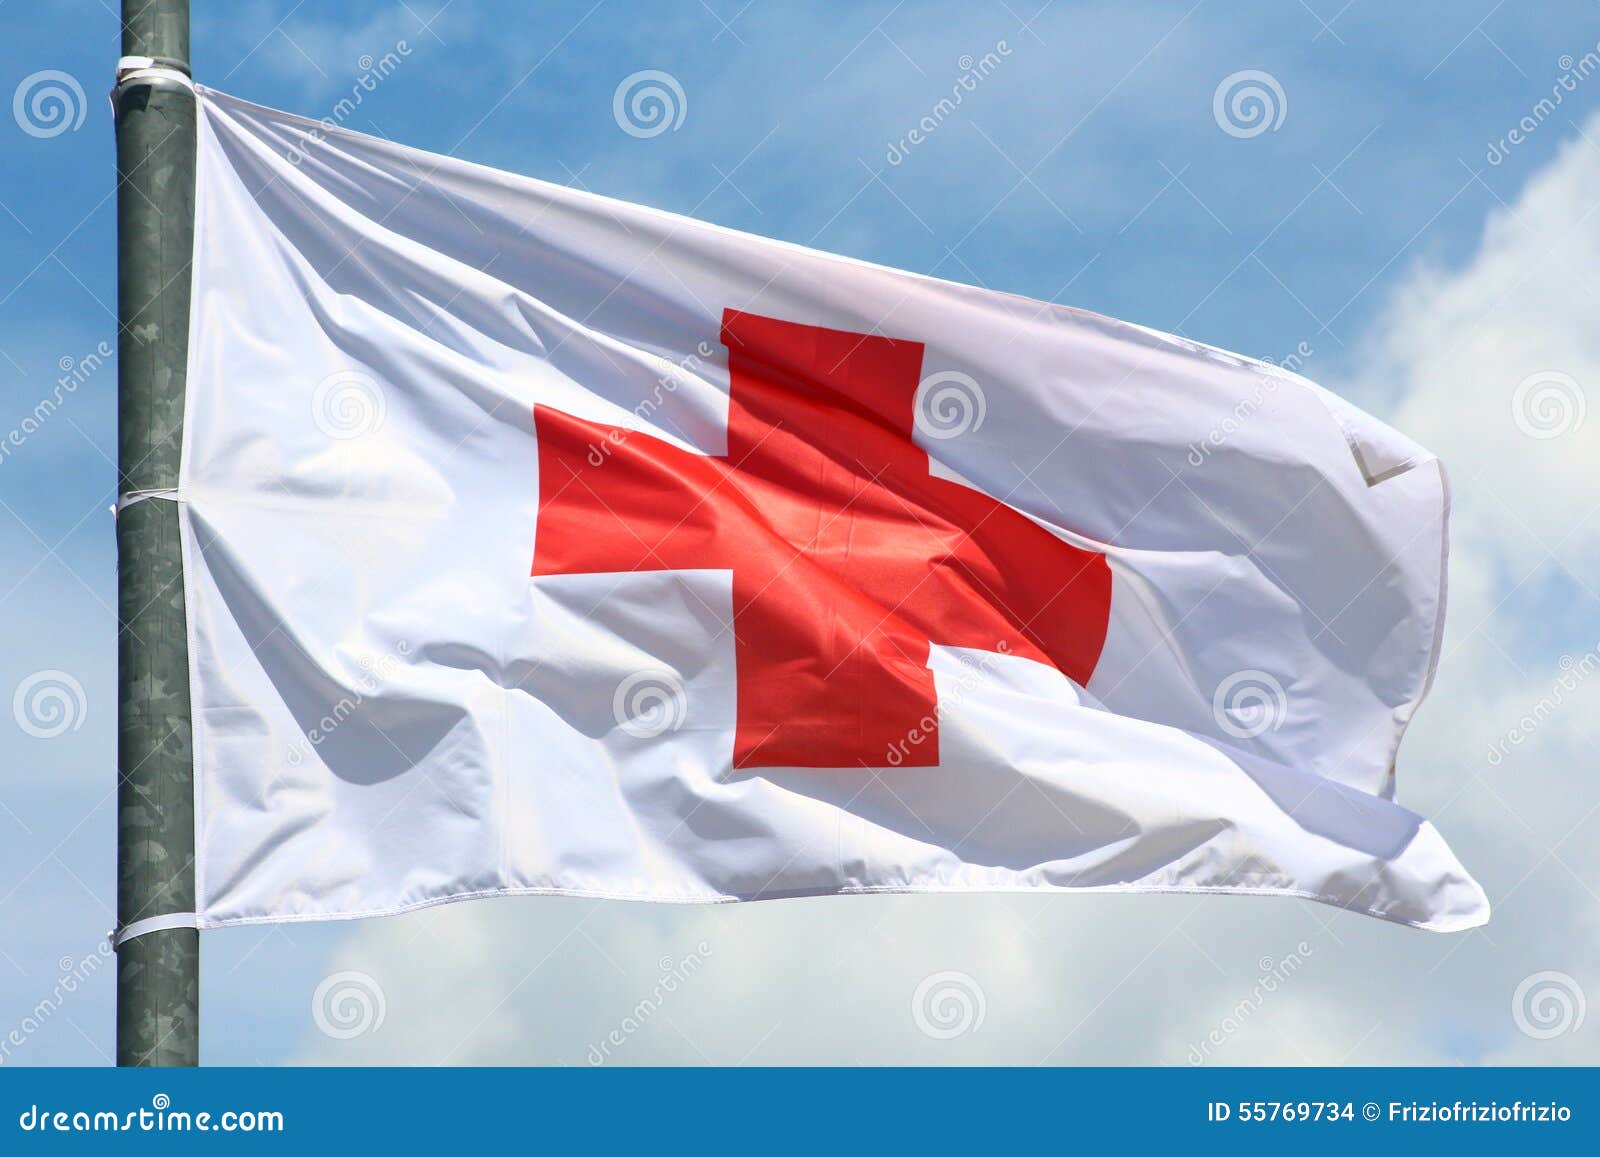 Flaggenfritze – Bandera de balcón Bandera Cruz Roja – 90 x 150 cm 